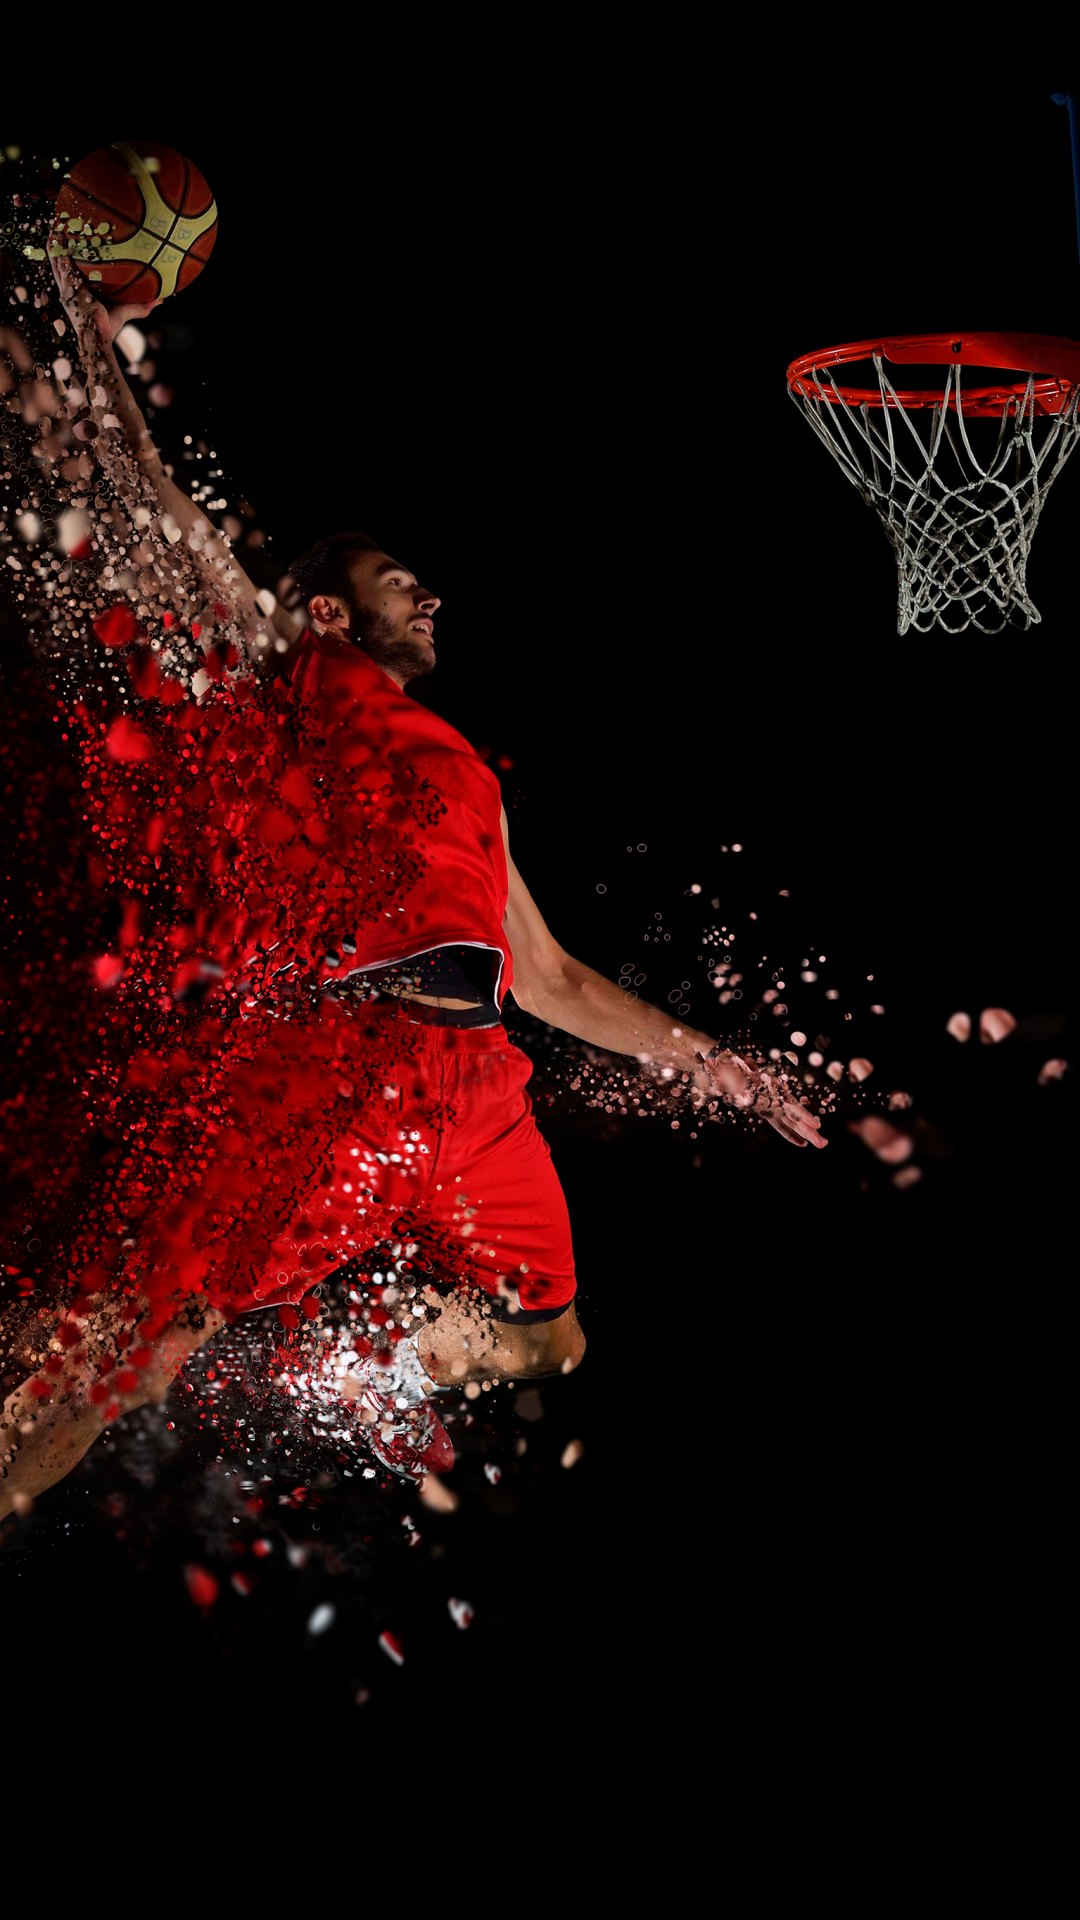 Sports Basketball Wallpaper Wide Athletics Wallpaper 1080p